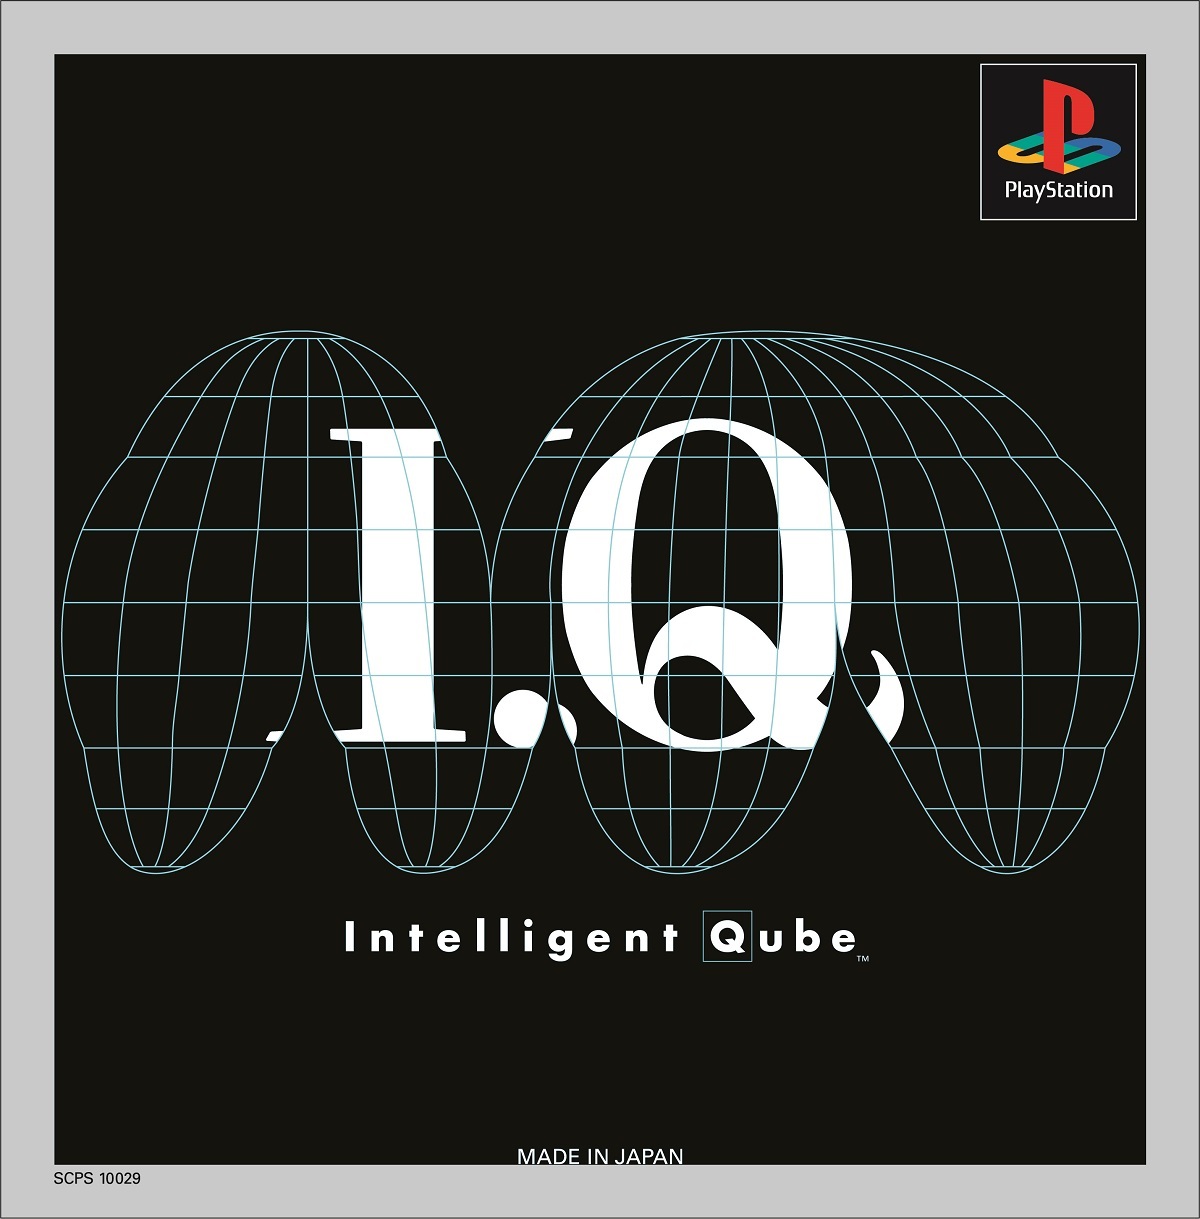 PlayStationゲーム「I.Q Intelligent Qube」 1997　©Sony Computer Entertainment Inc.